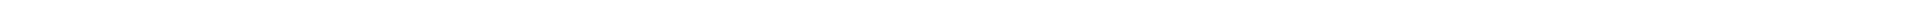 Виниры на зубы – цены в Казахстане Алматы, Астане, Усть-Каменогорске, Атырау, Уральск, Кокшетау в Казахстане, фото 9